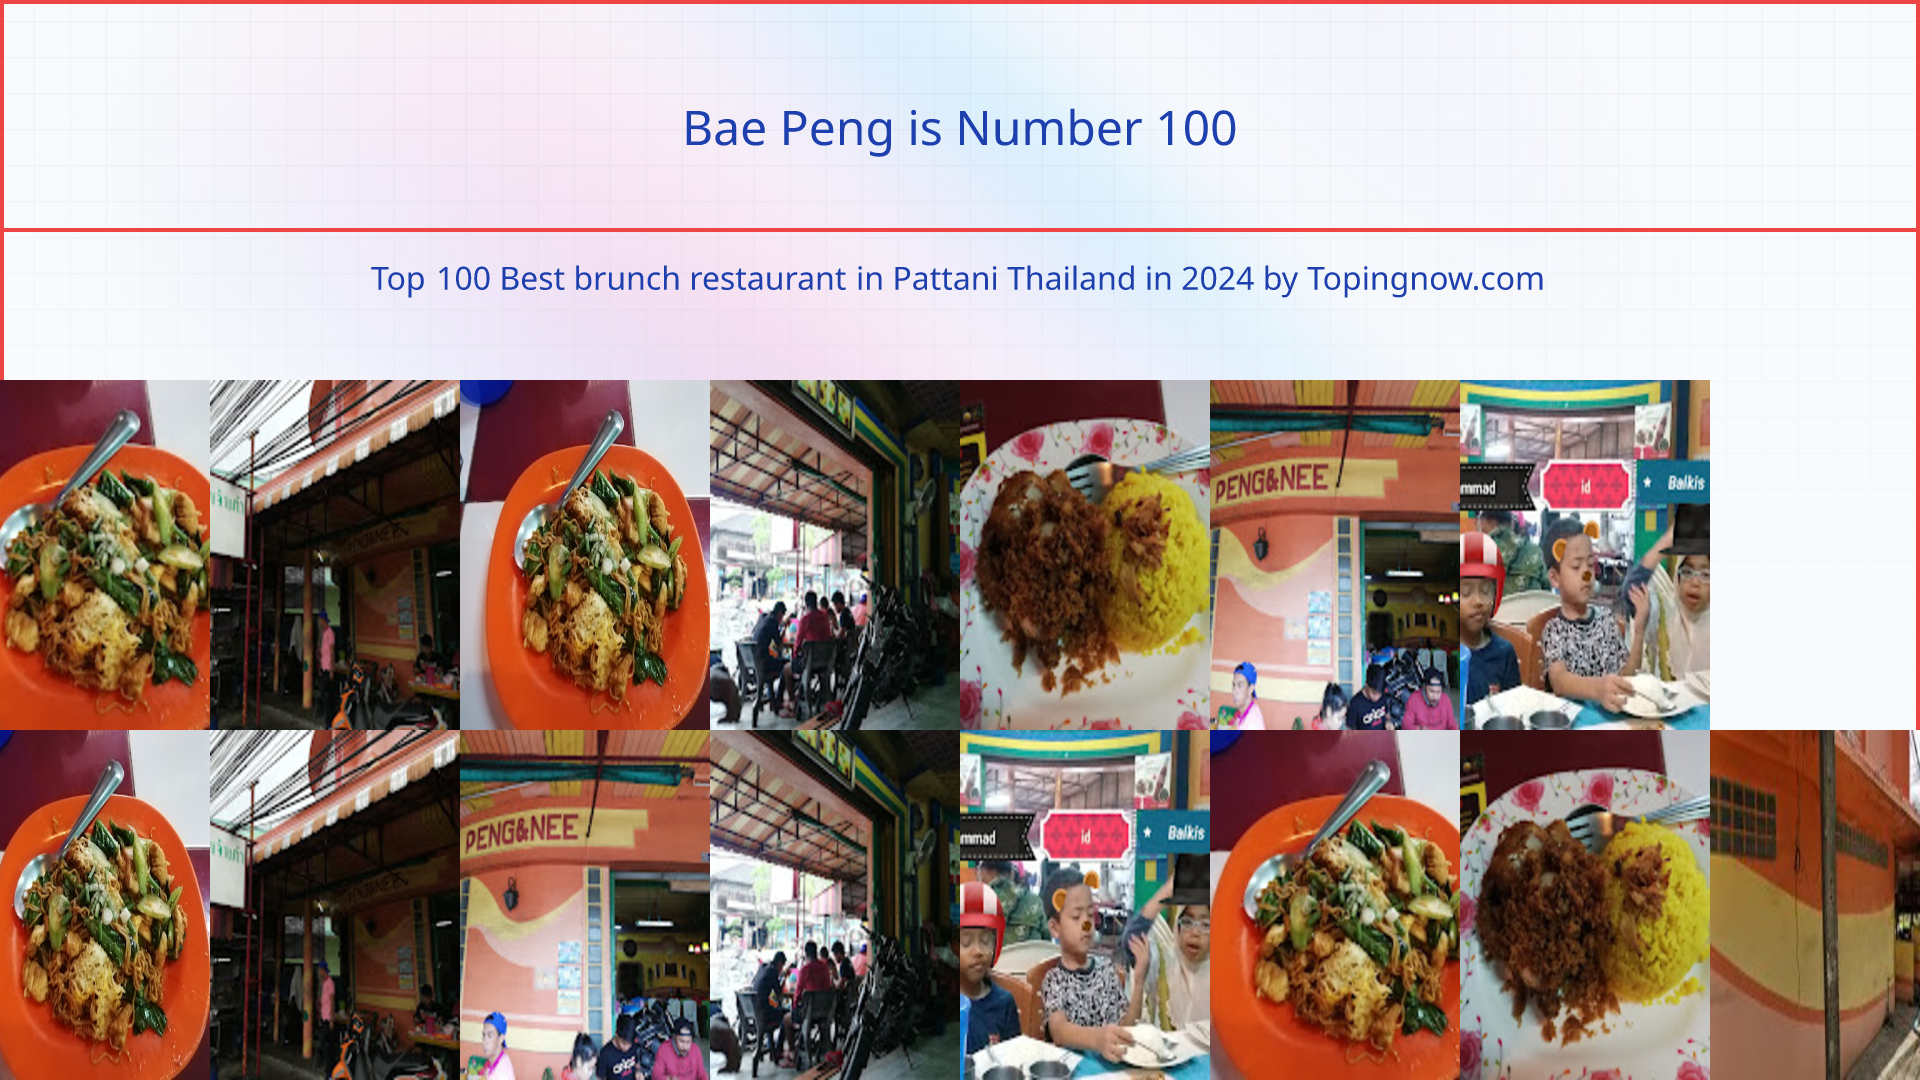 Bae Peng: Top 100 Best brunch restaurant in Pattani Thailand in 2024